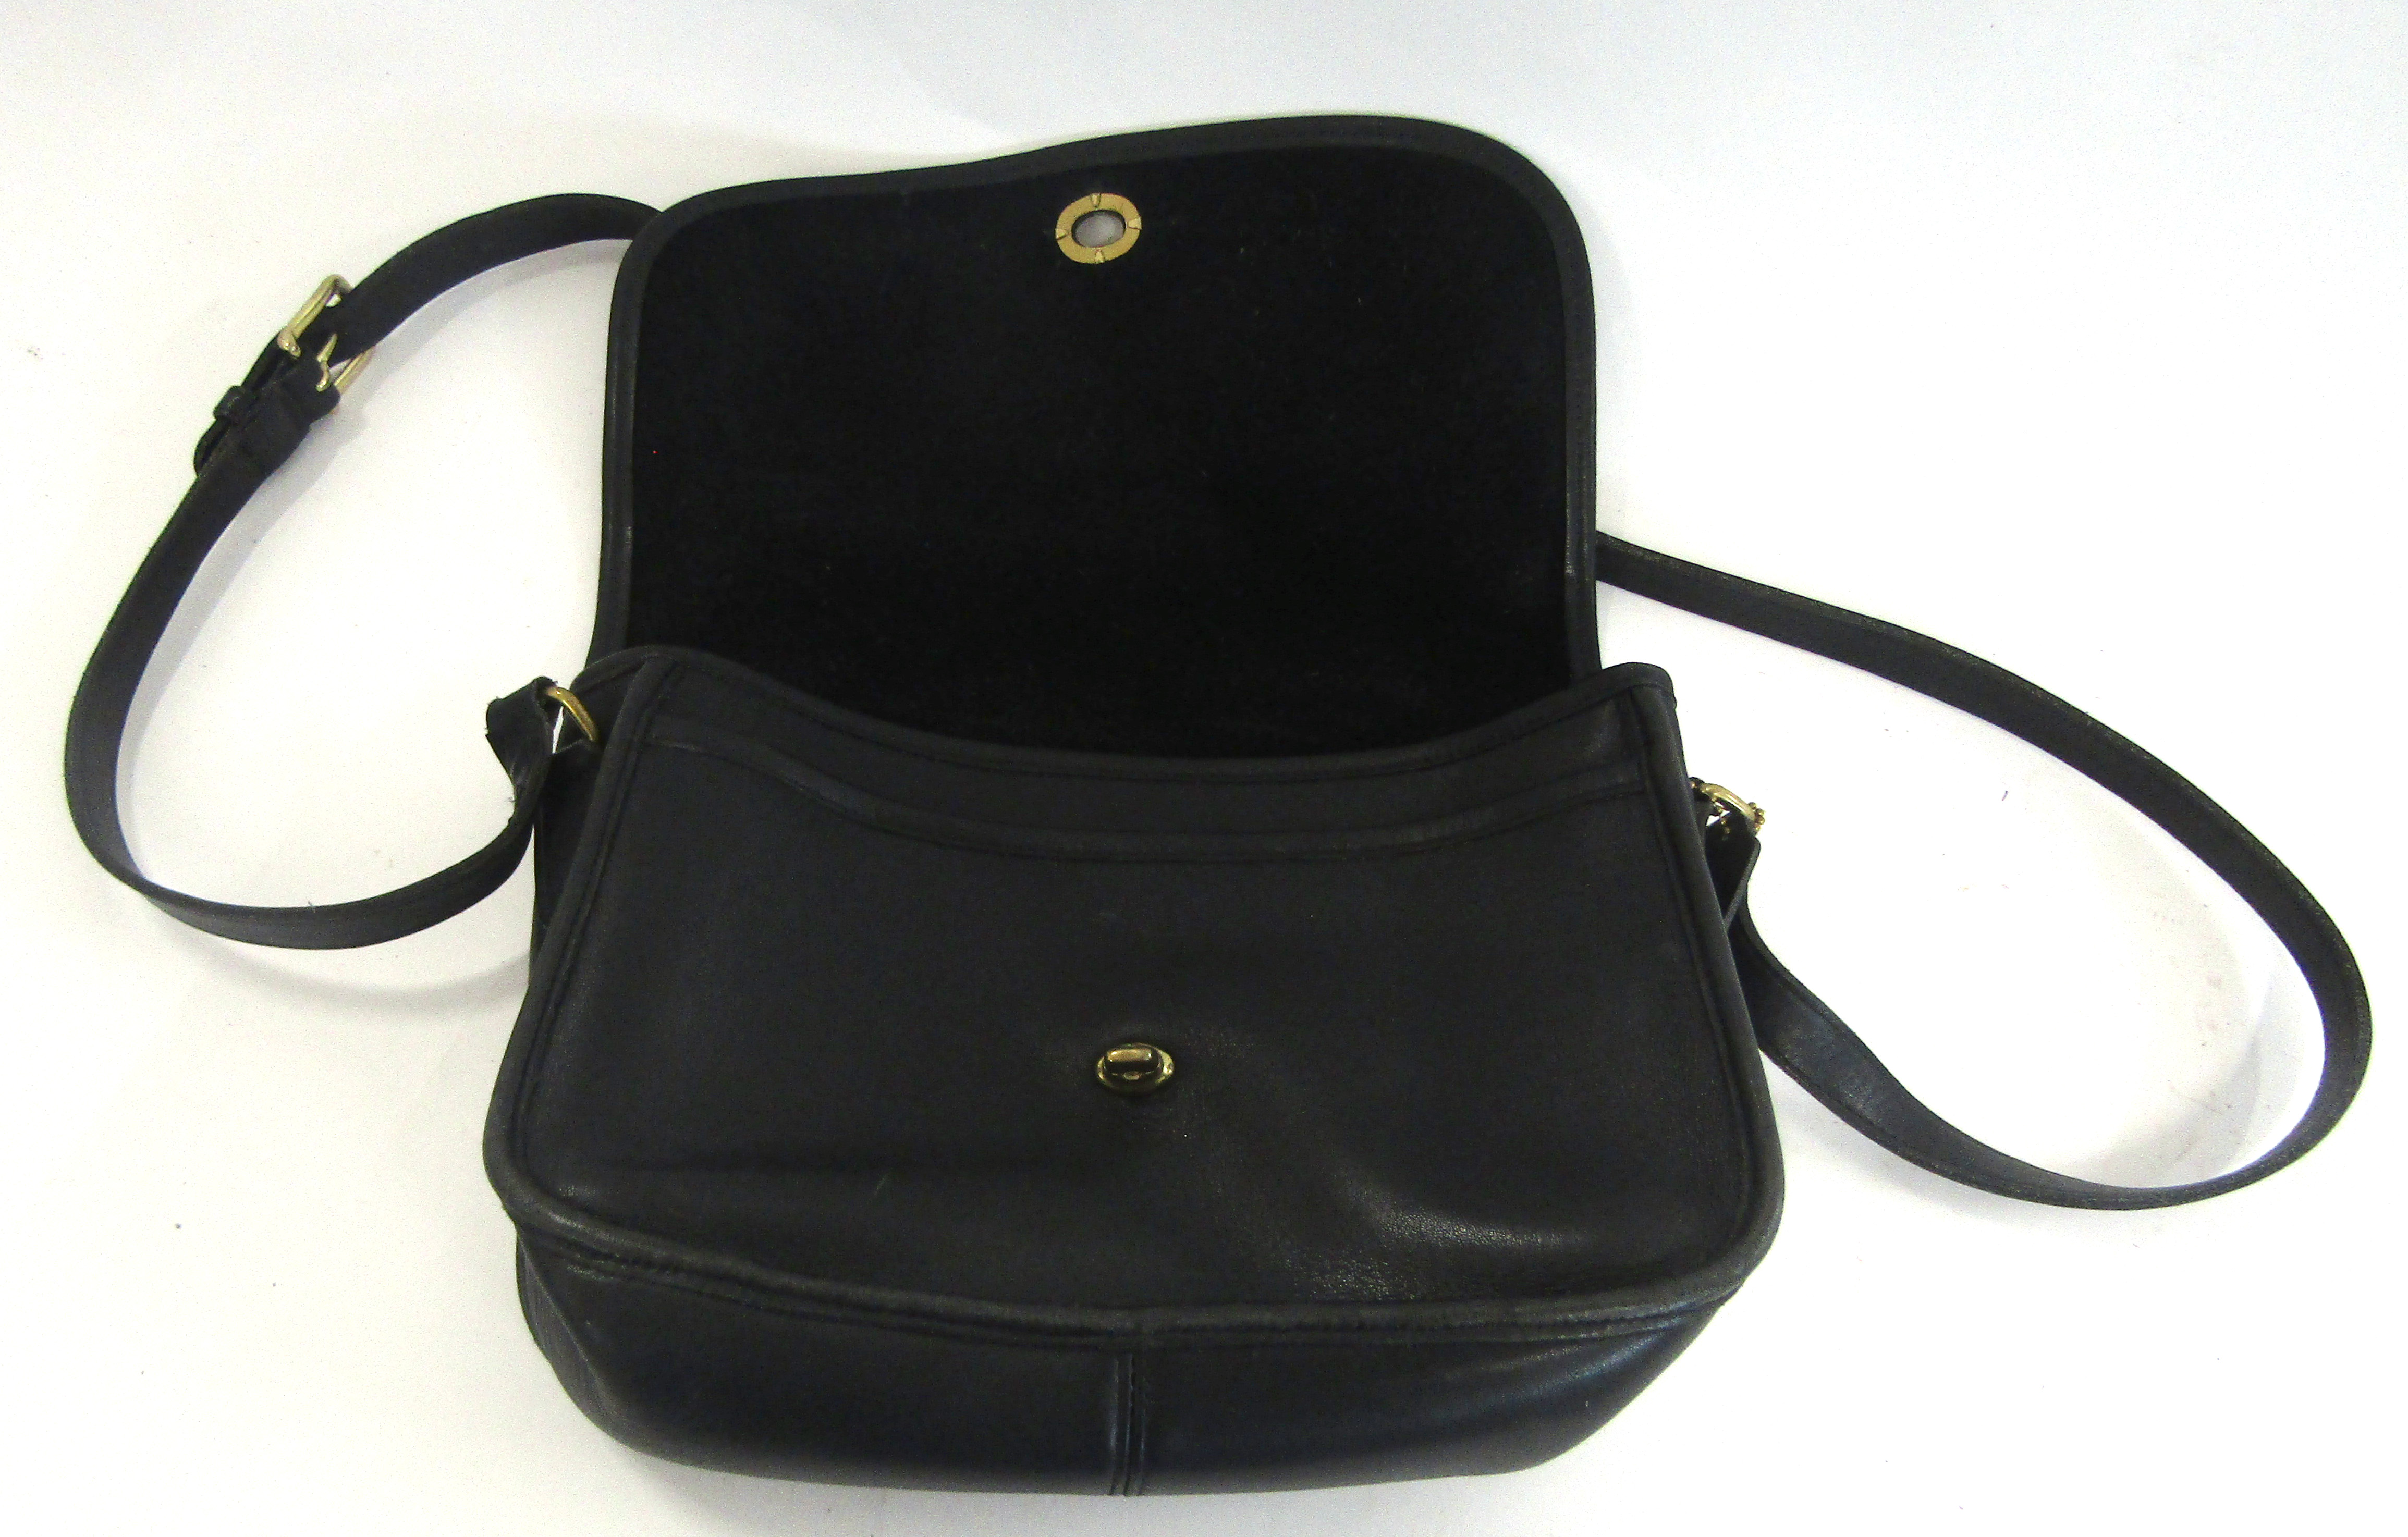 Ladies black patent leather handbag by Coach, ref no J10-9790 - Image 2 of 2